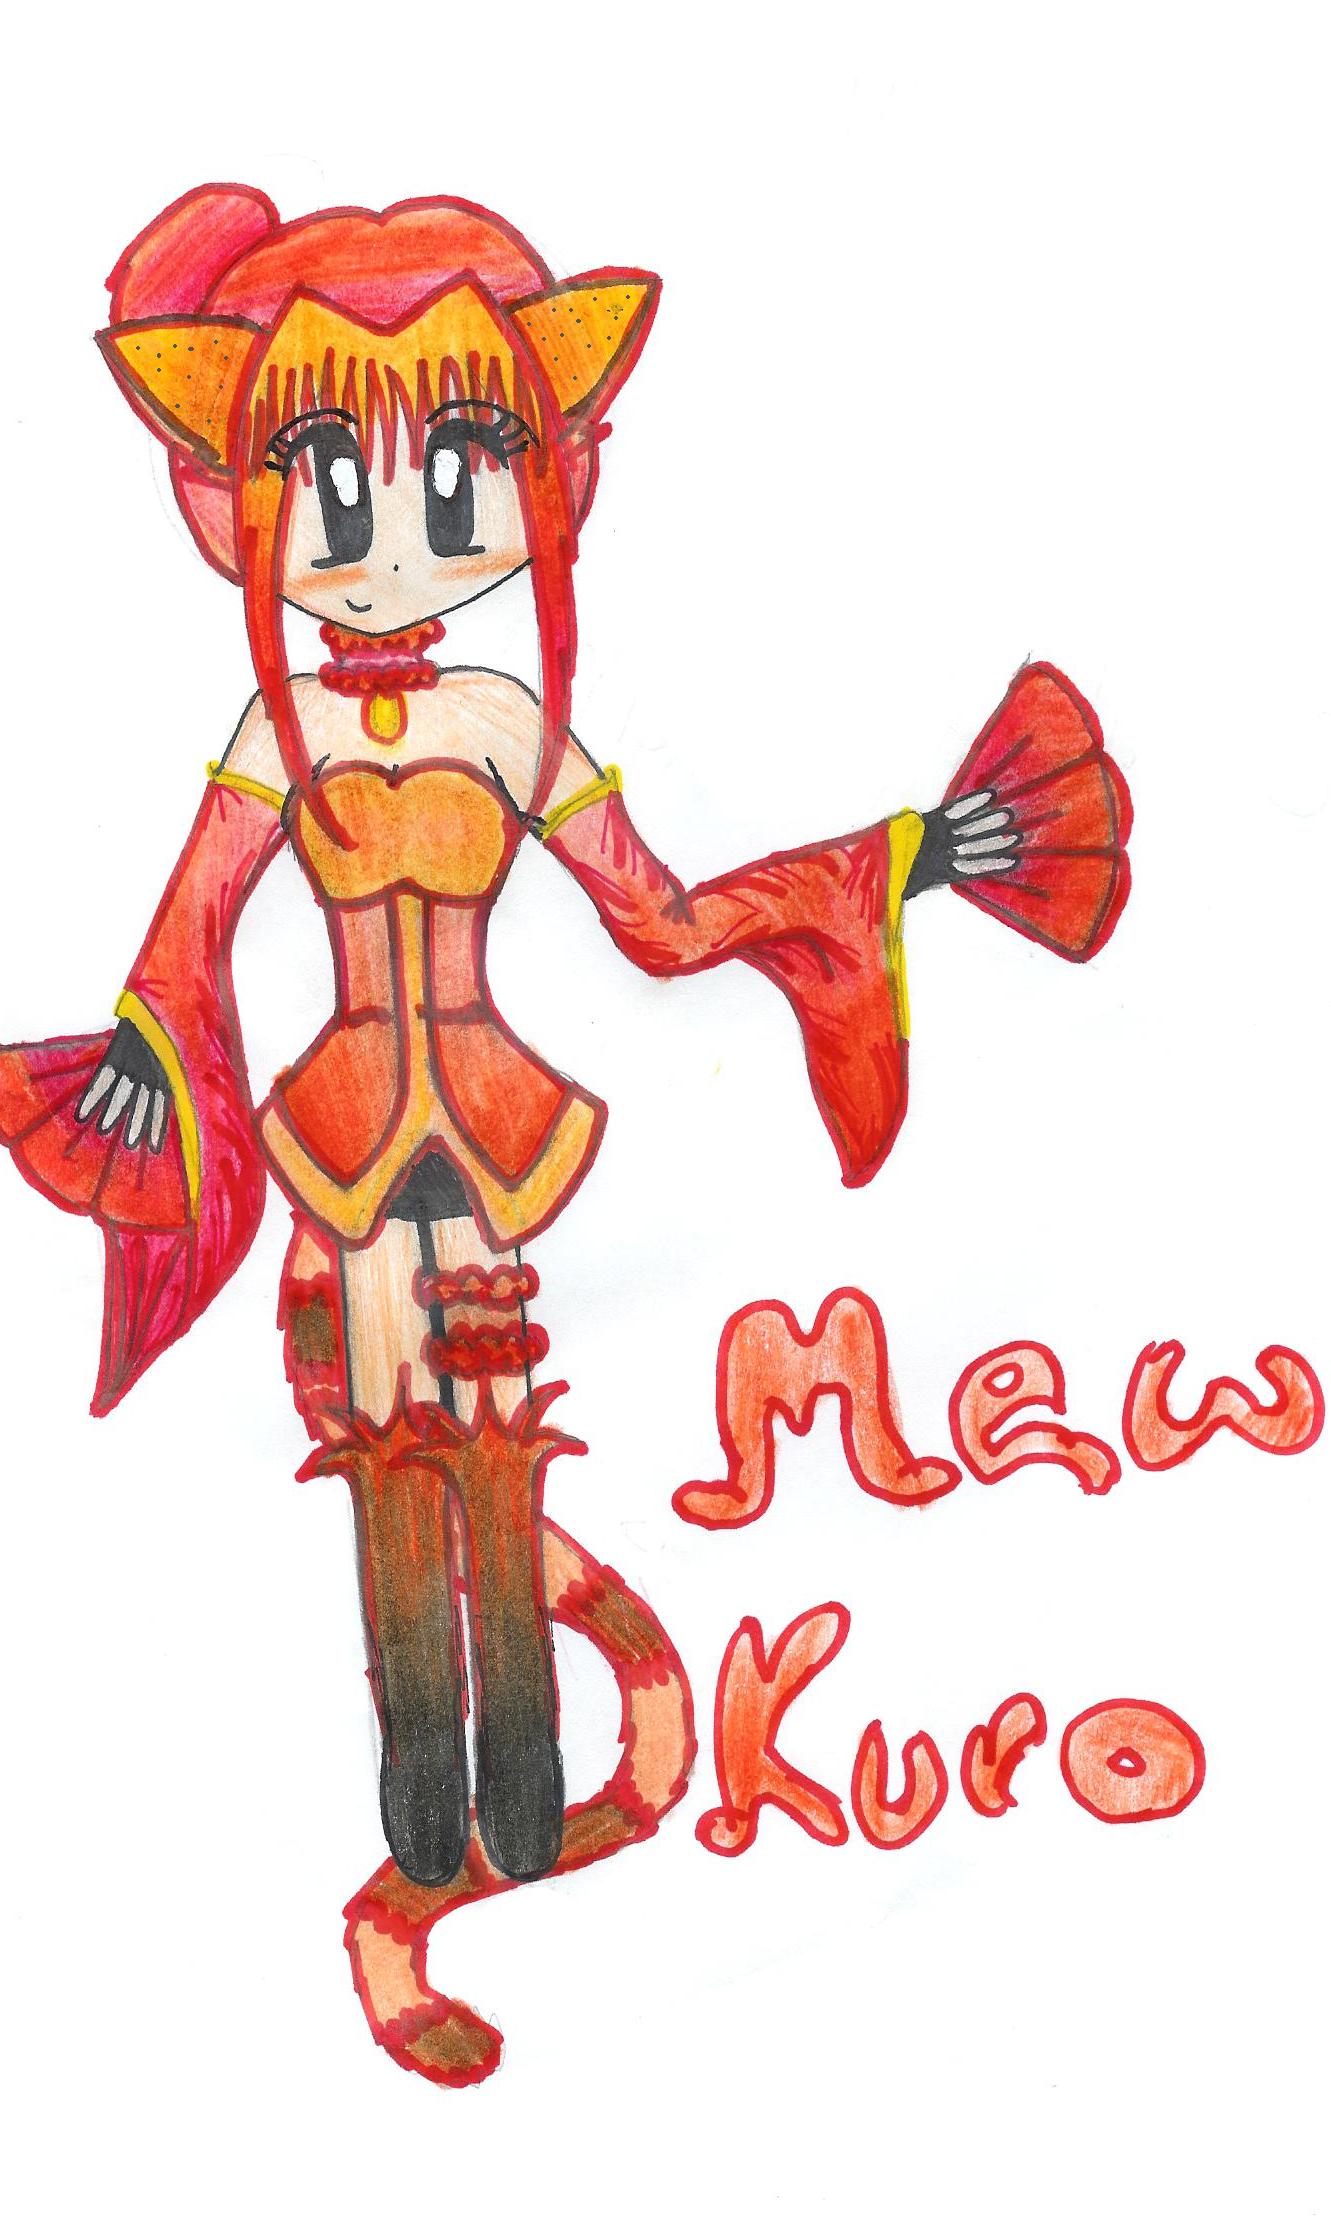 Mew Kuro ~*Request*~ from Kasai_Wolf by Mizu_Wolf